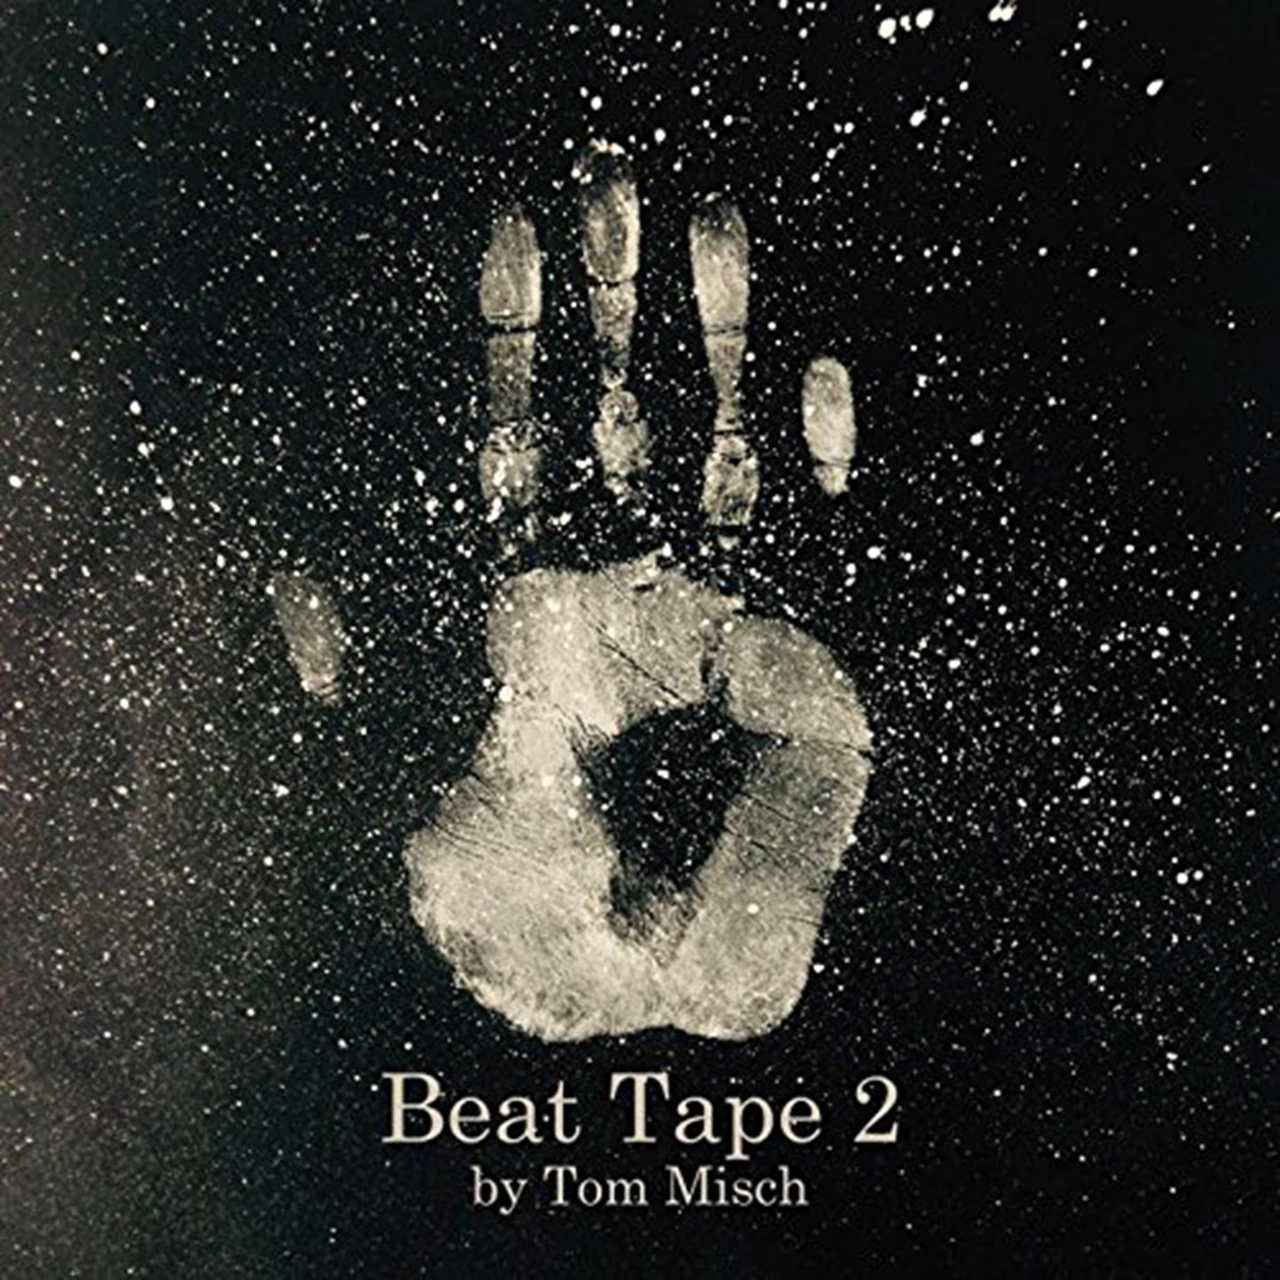 Beat Tape 2 by Tom Misch